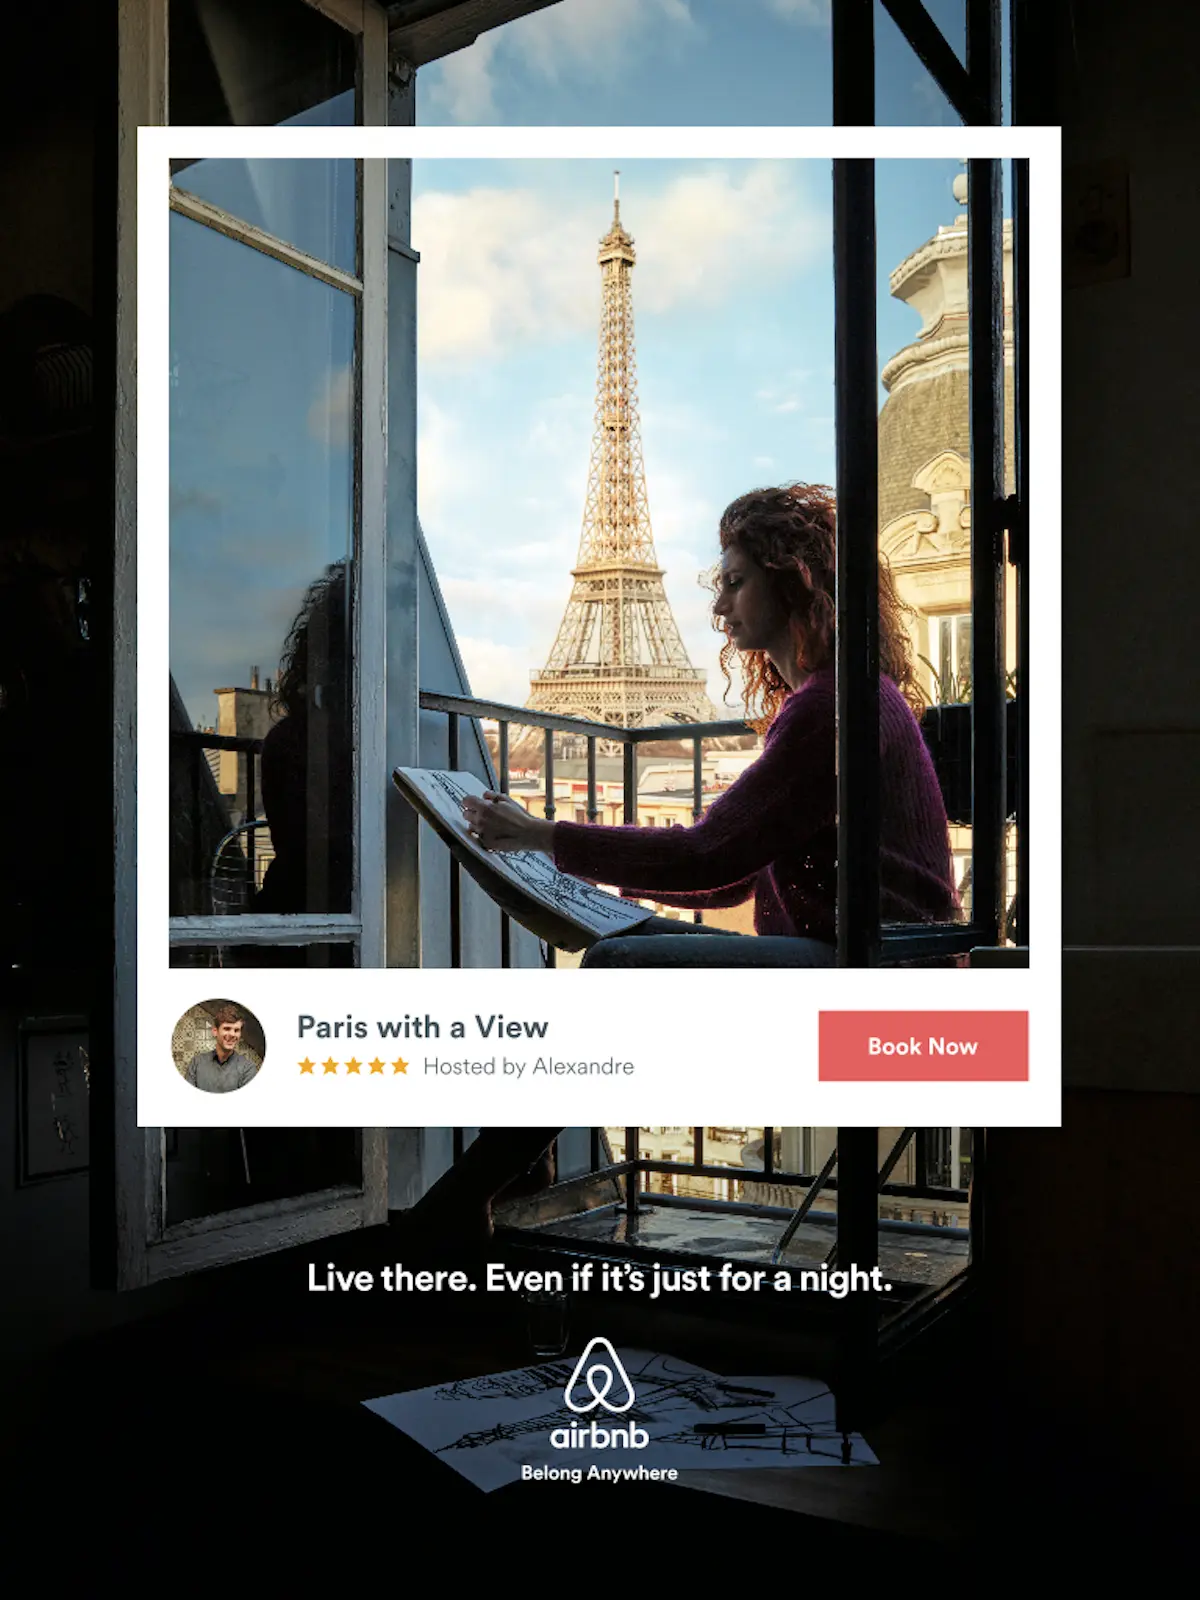  persuasive advertising airbnb example